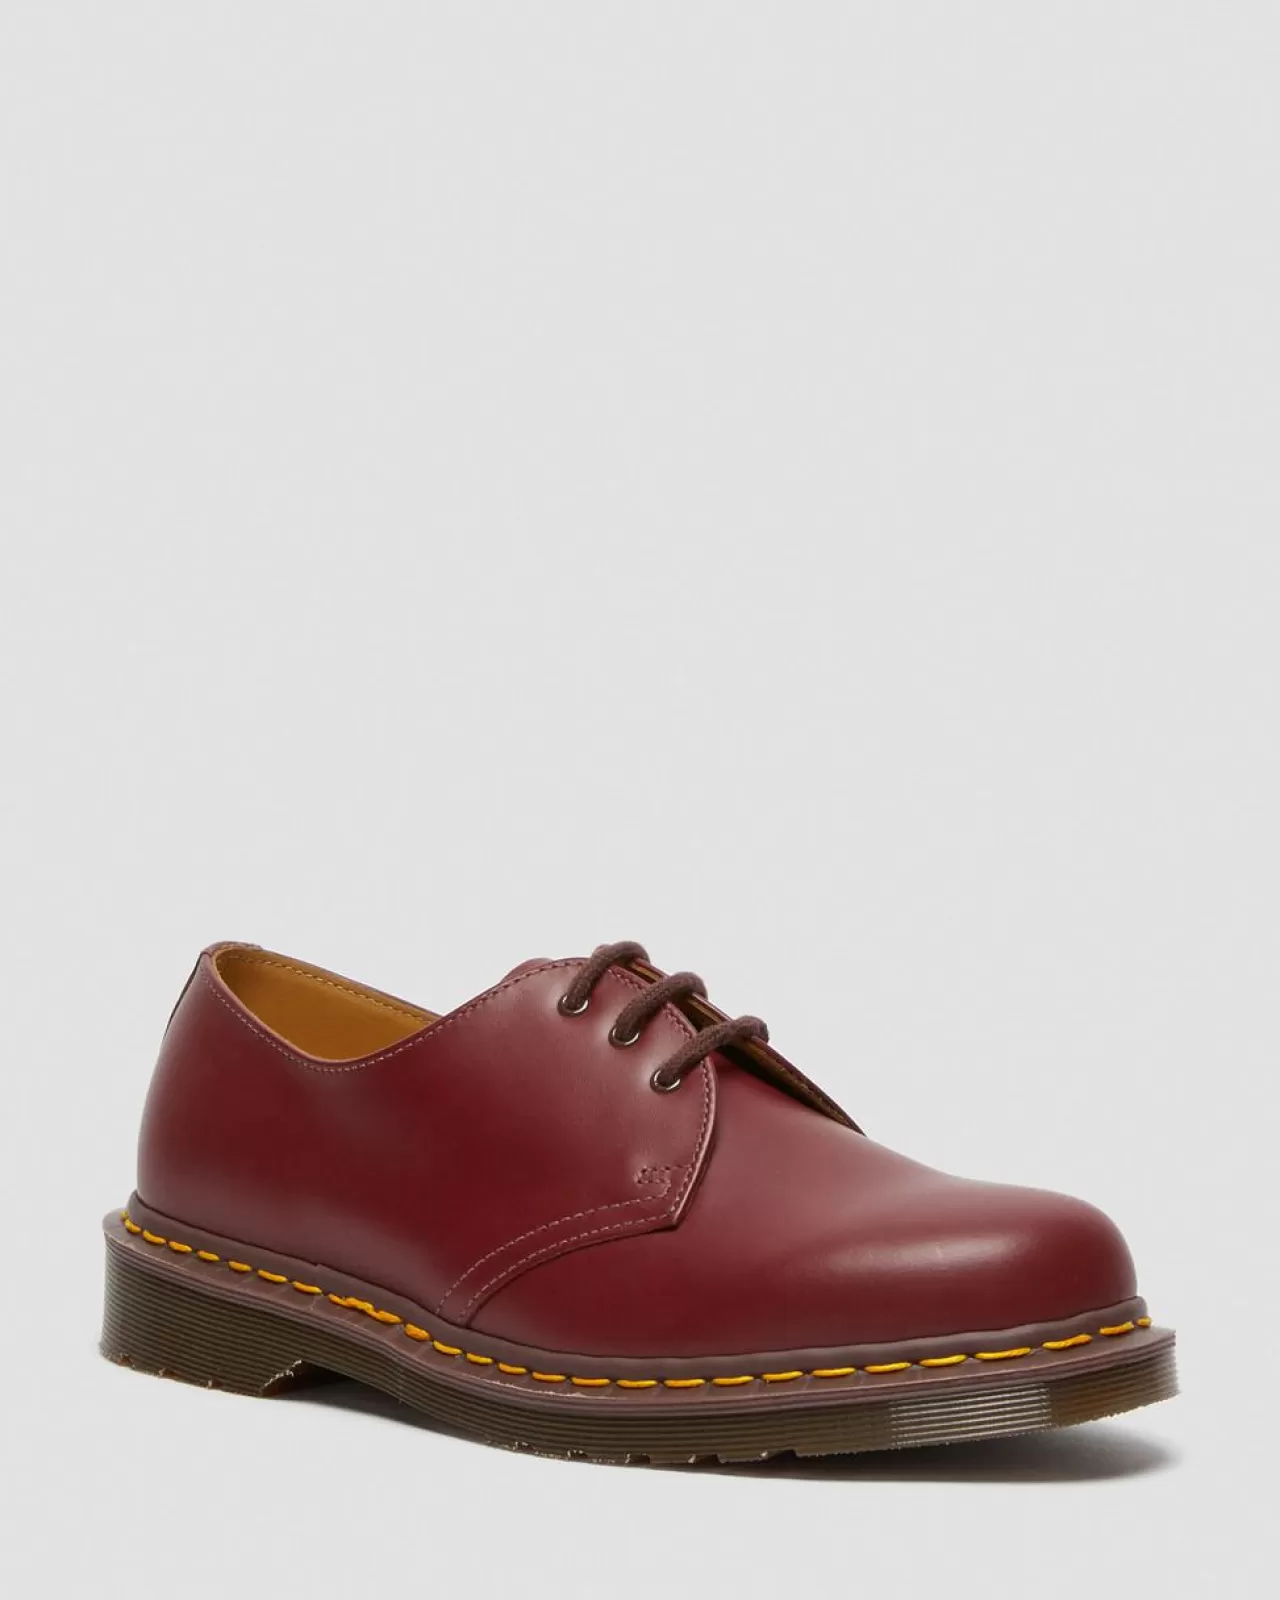 Originals | Oxfords^Dr. Martens 1461 Vintage Made in England Oxford Shoes Red — Quilon